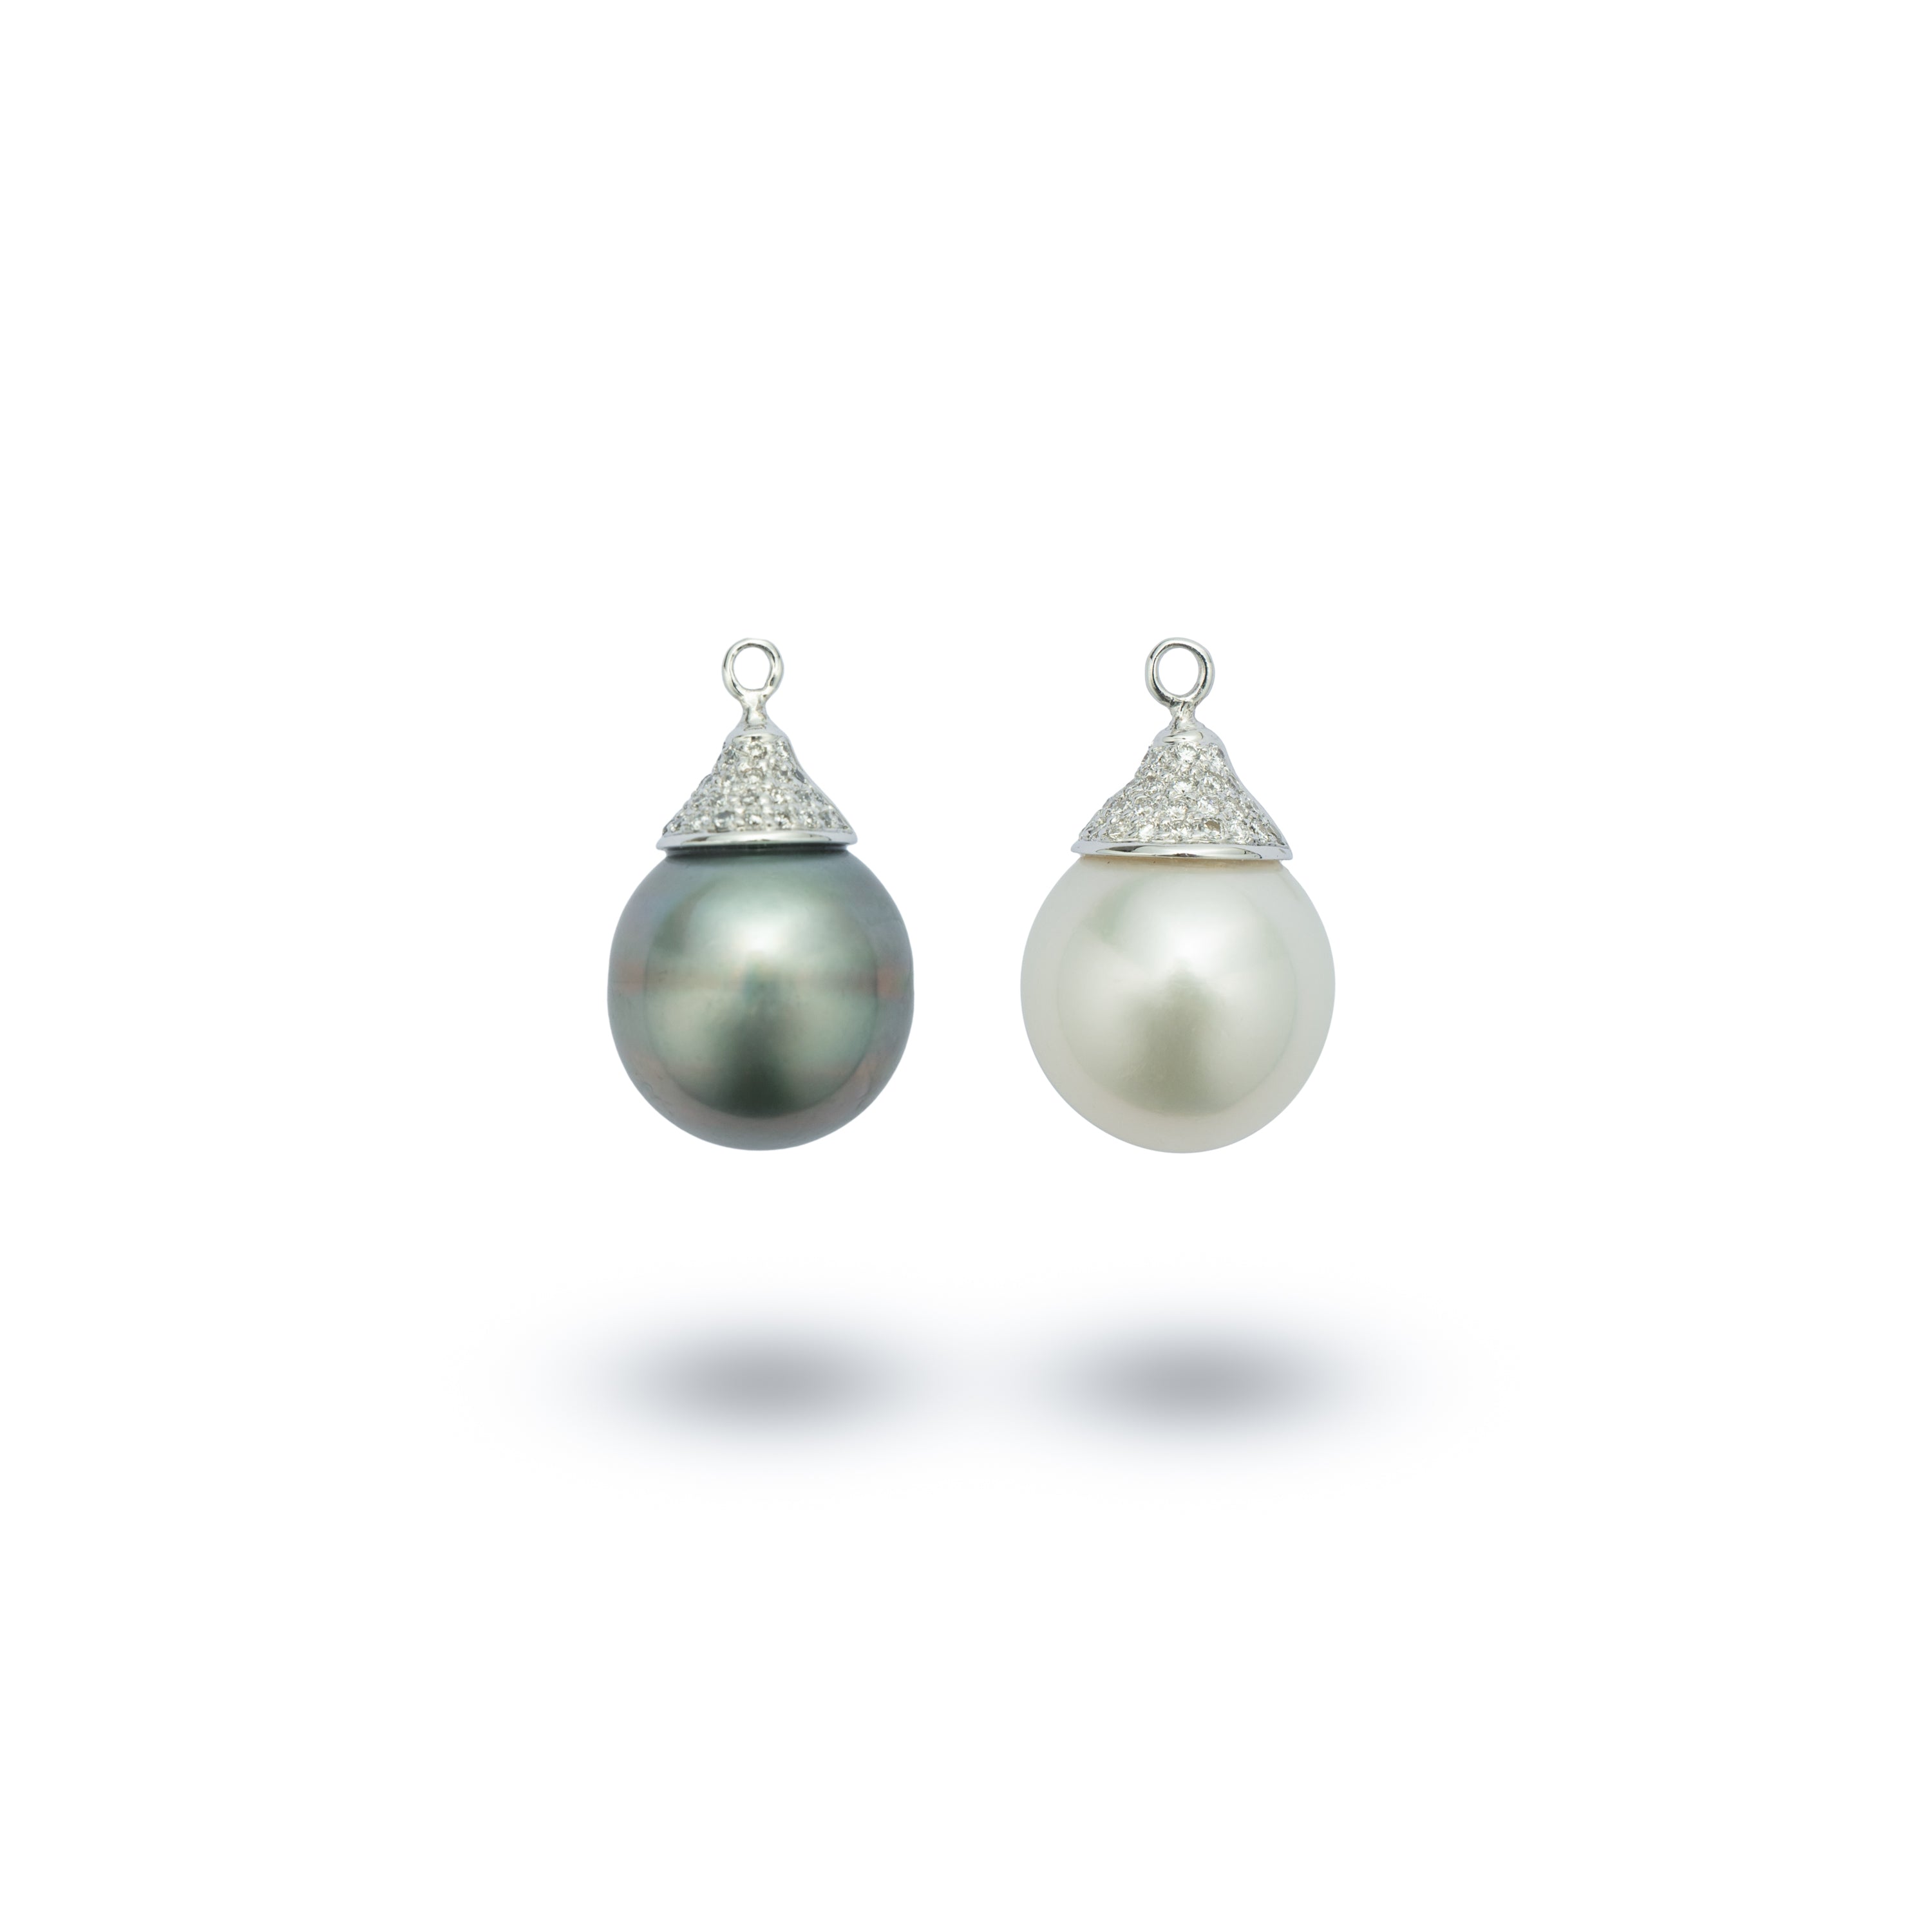 transformational-diamond-south-sea-pearl-necklace-earrings-43627969052836.jpg